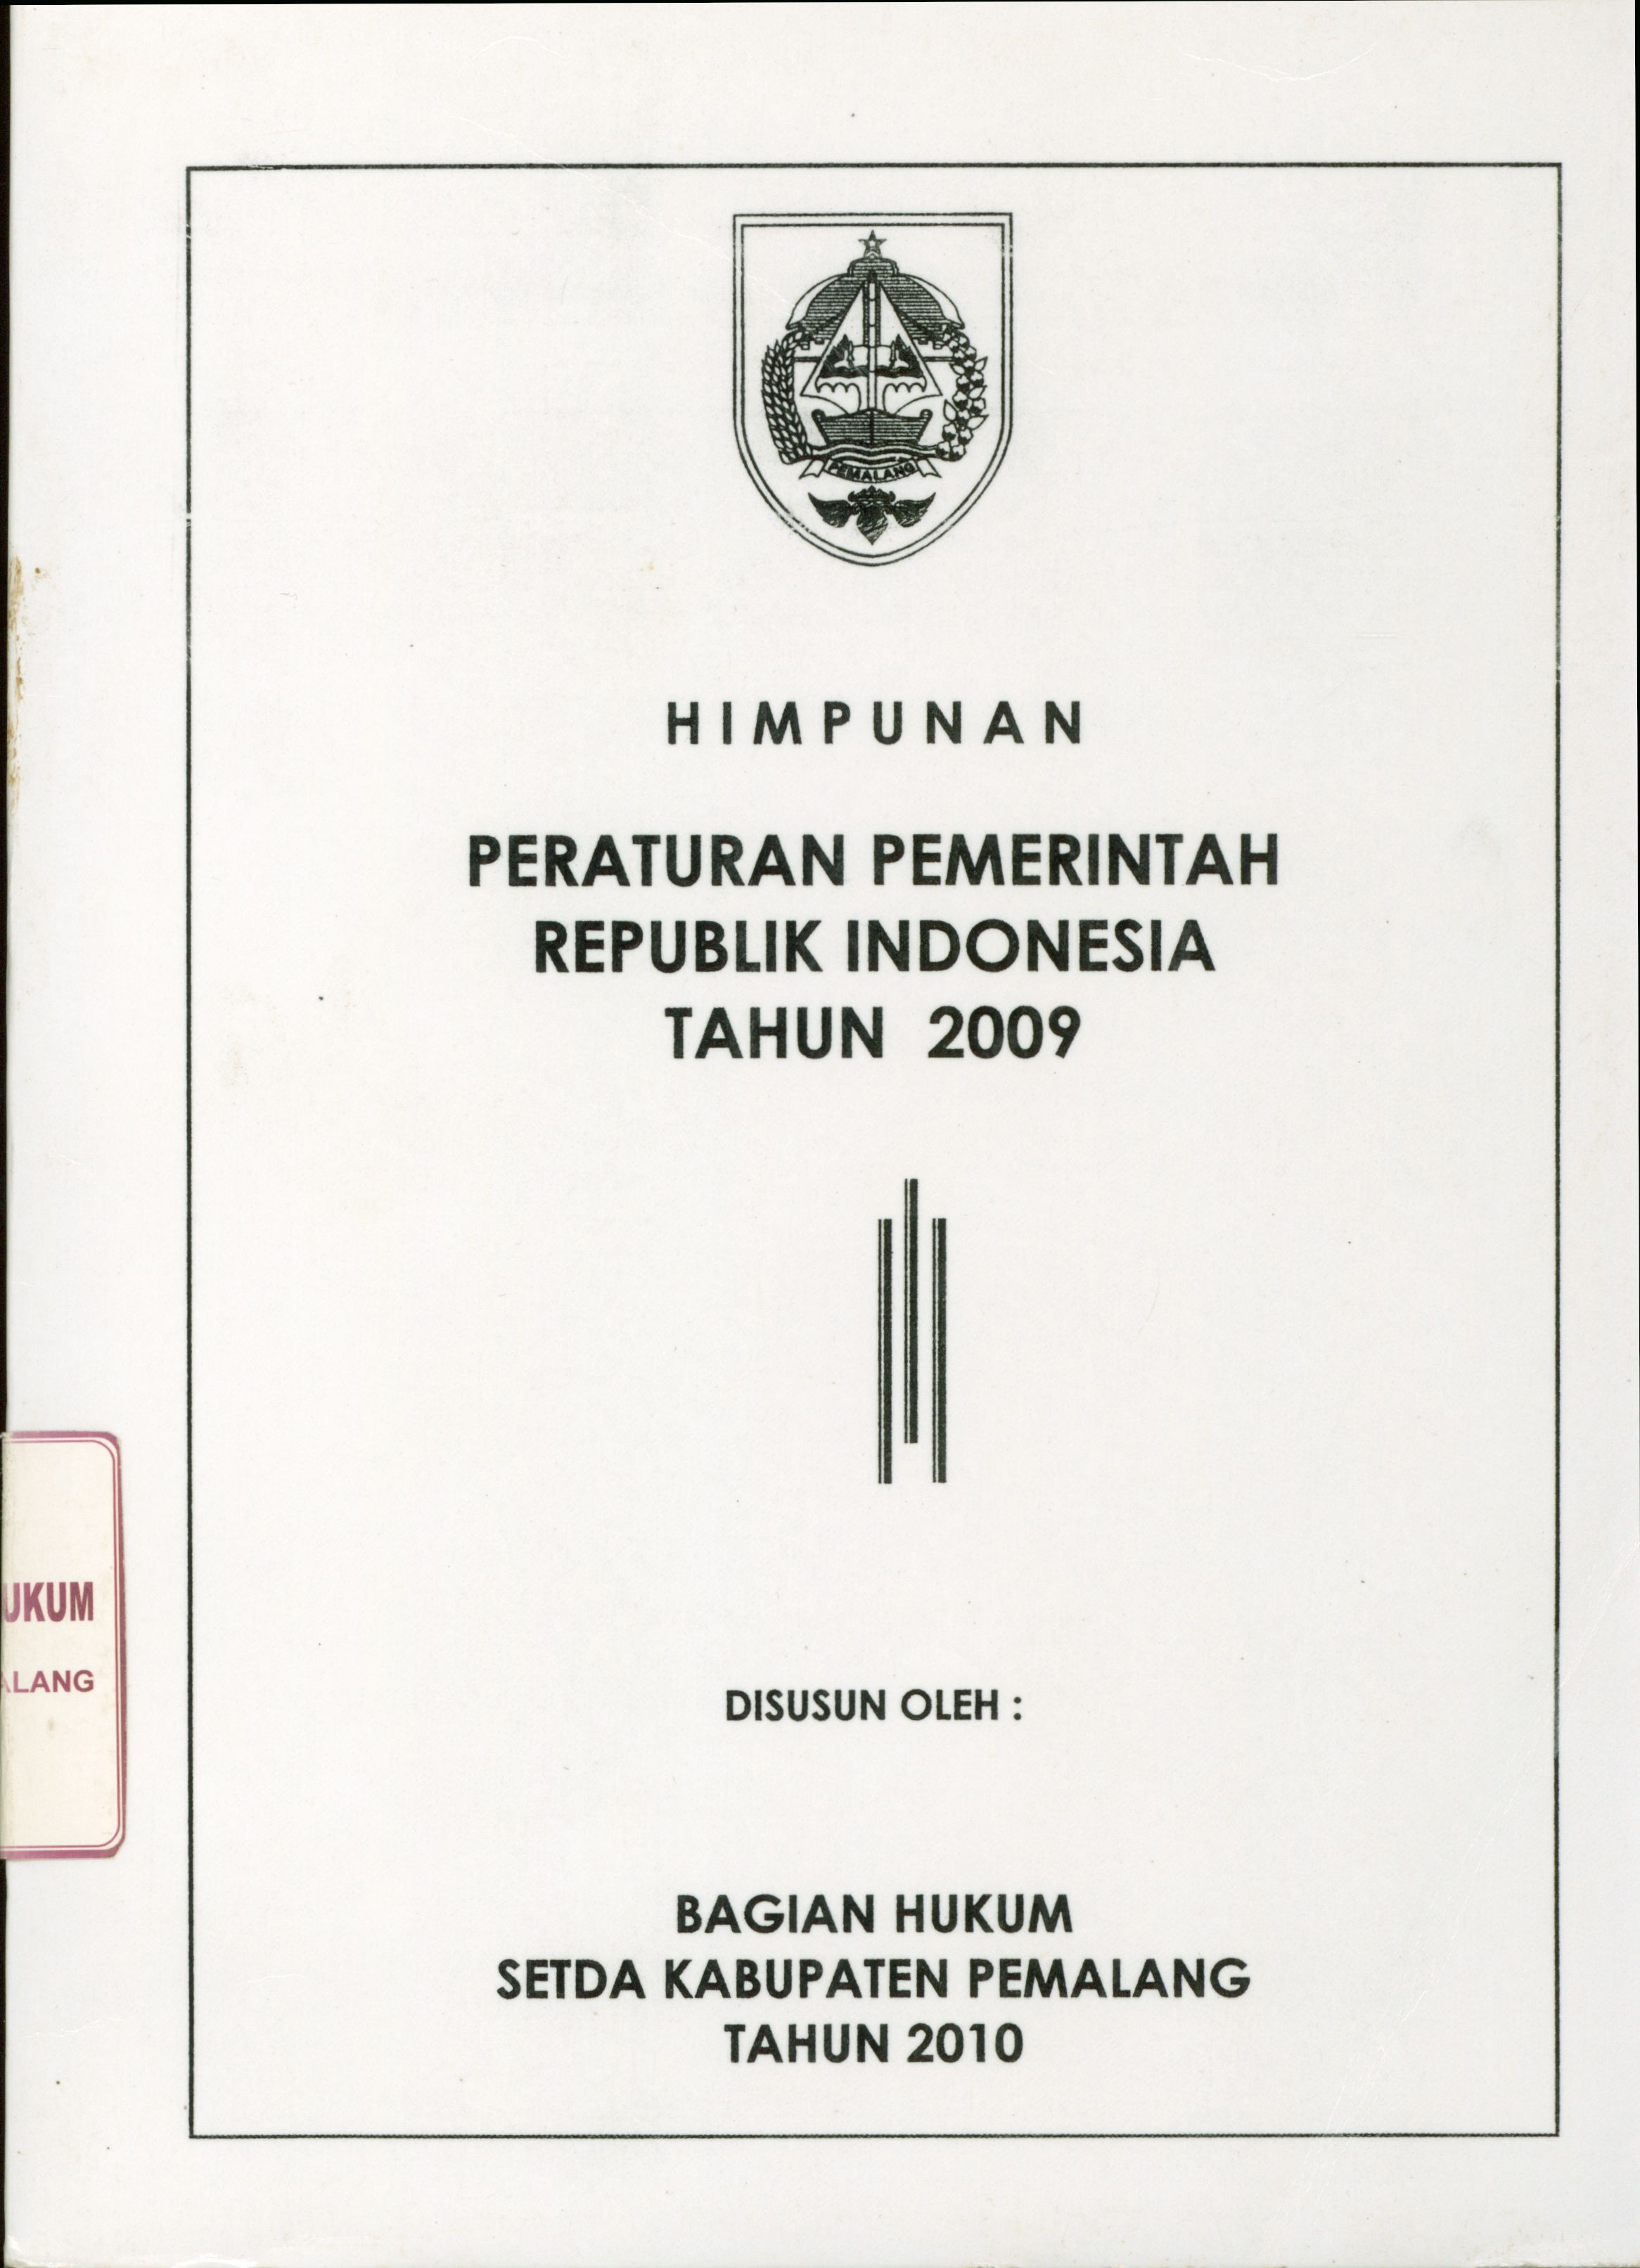 Himpunan Peraturan Pemerintah Republik Indonesia Tahun 2009